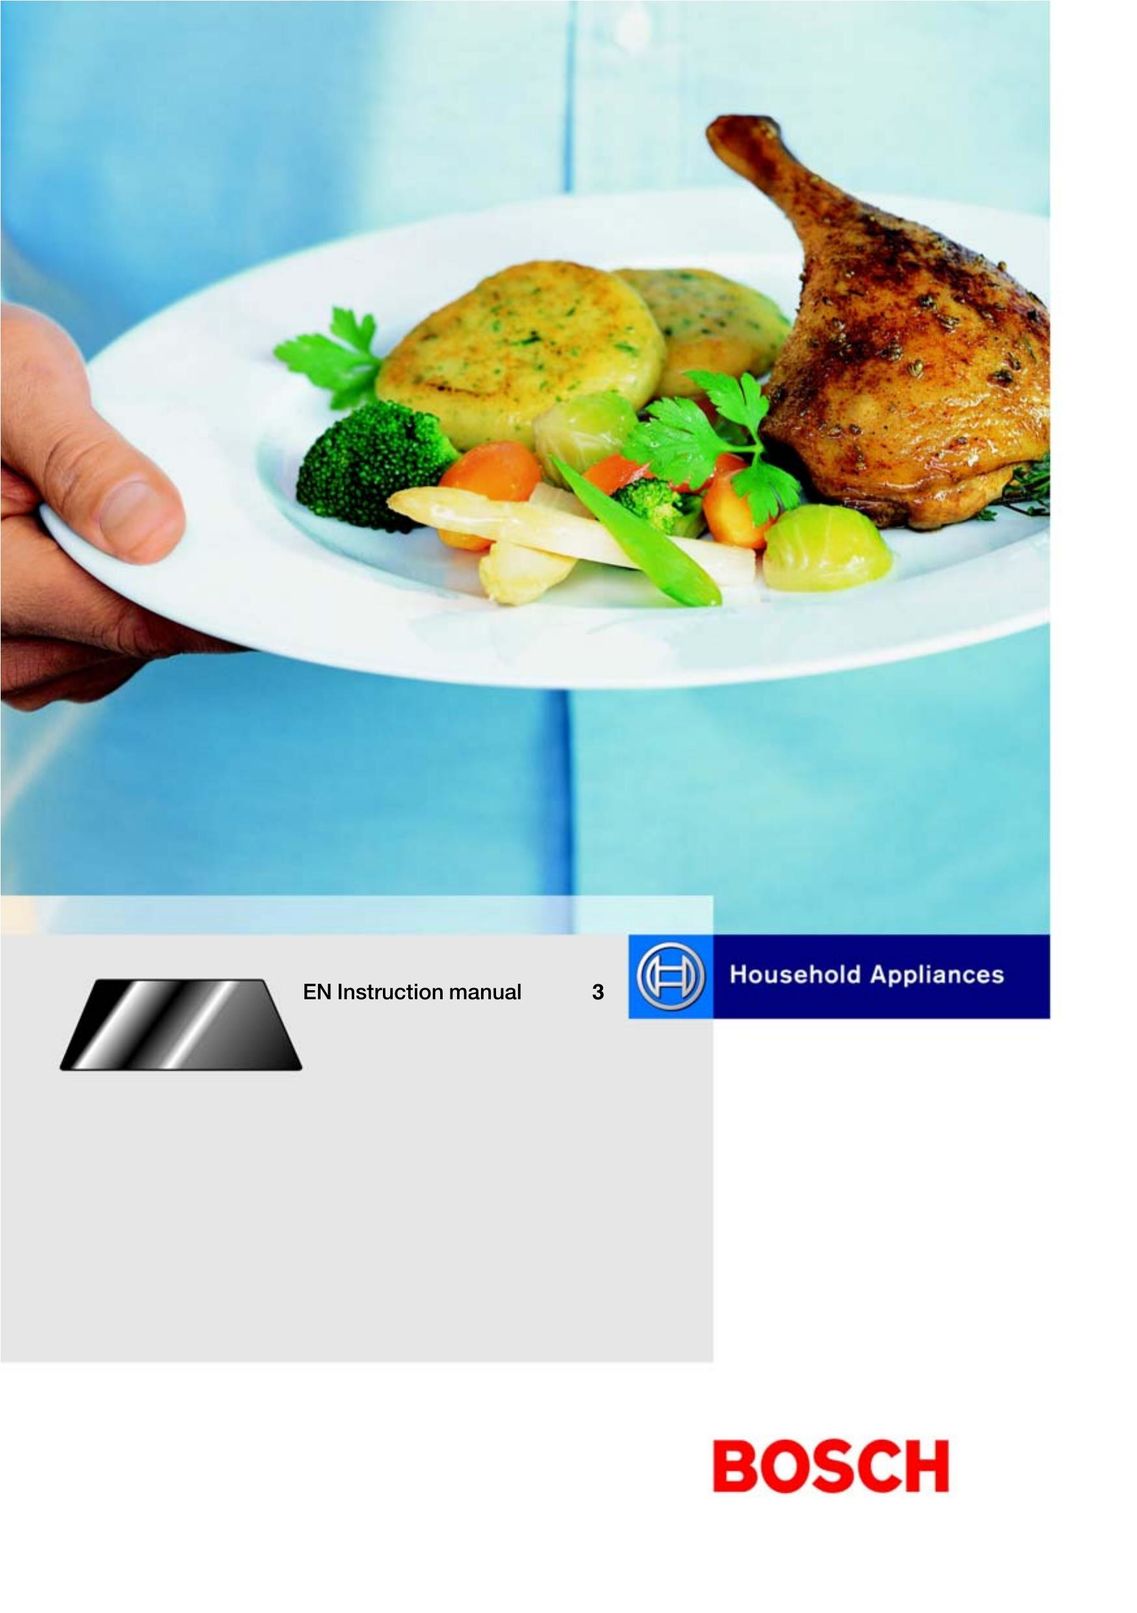 Bosch Appliances Hot Plate Food Warmer User Manual